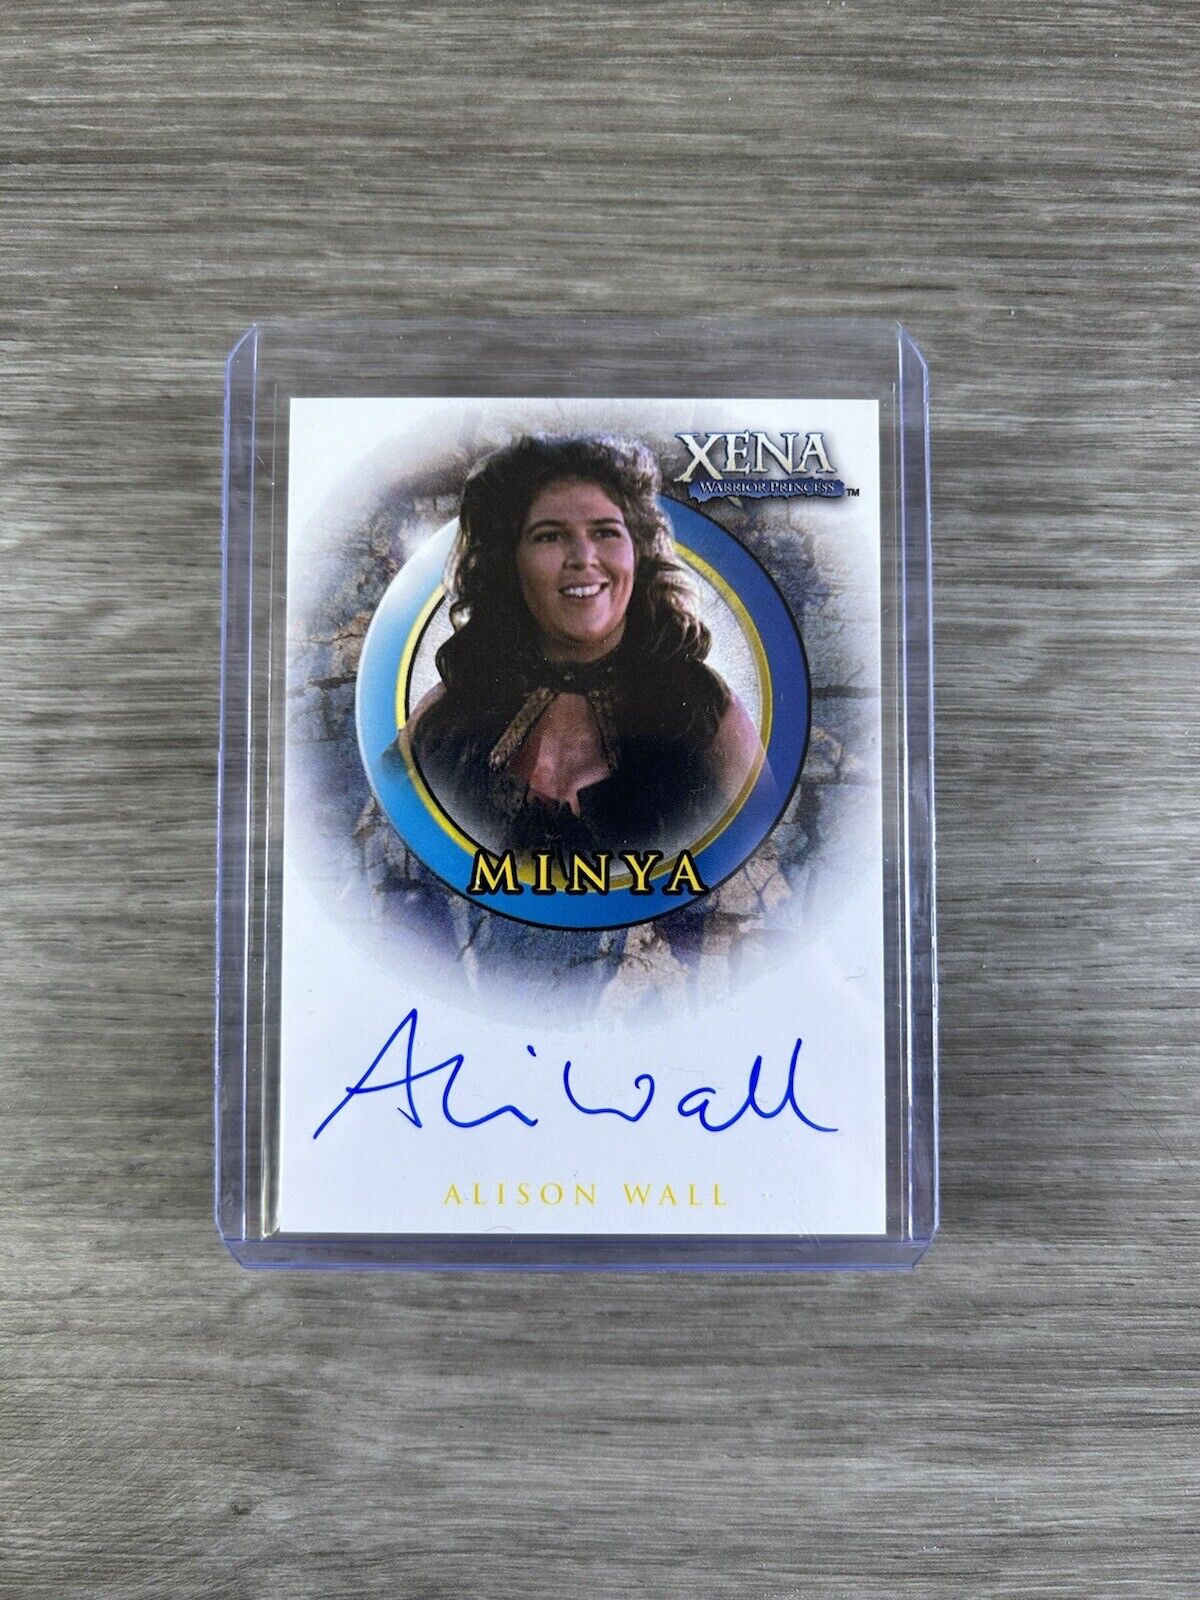 Alison Wall - Minya - Xena Warrior Princess A54 Autograph Card